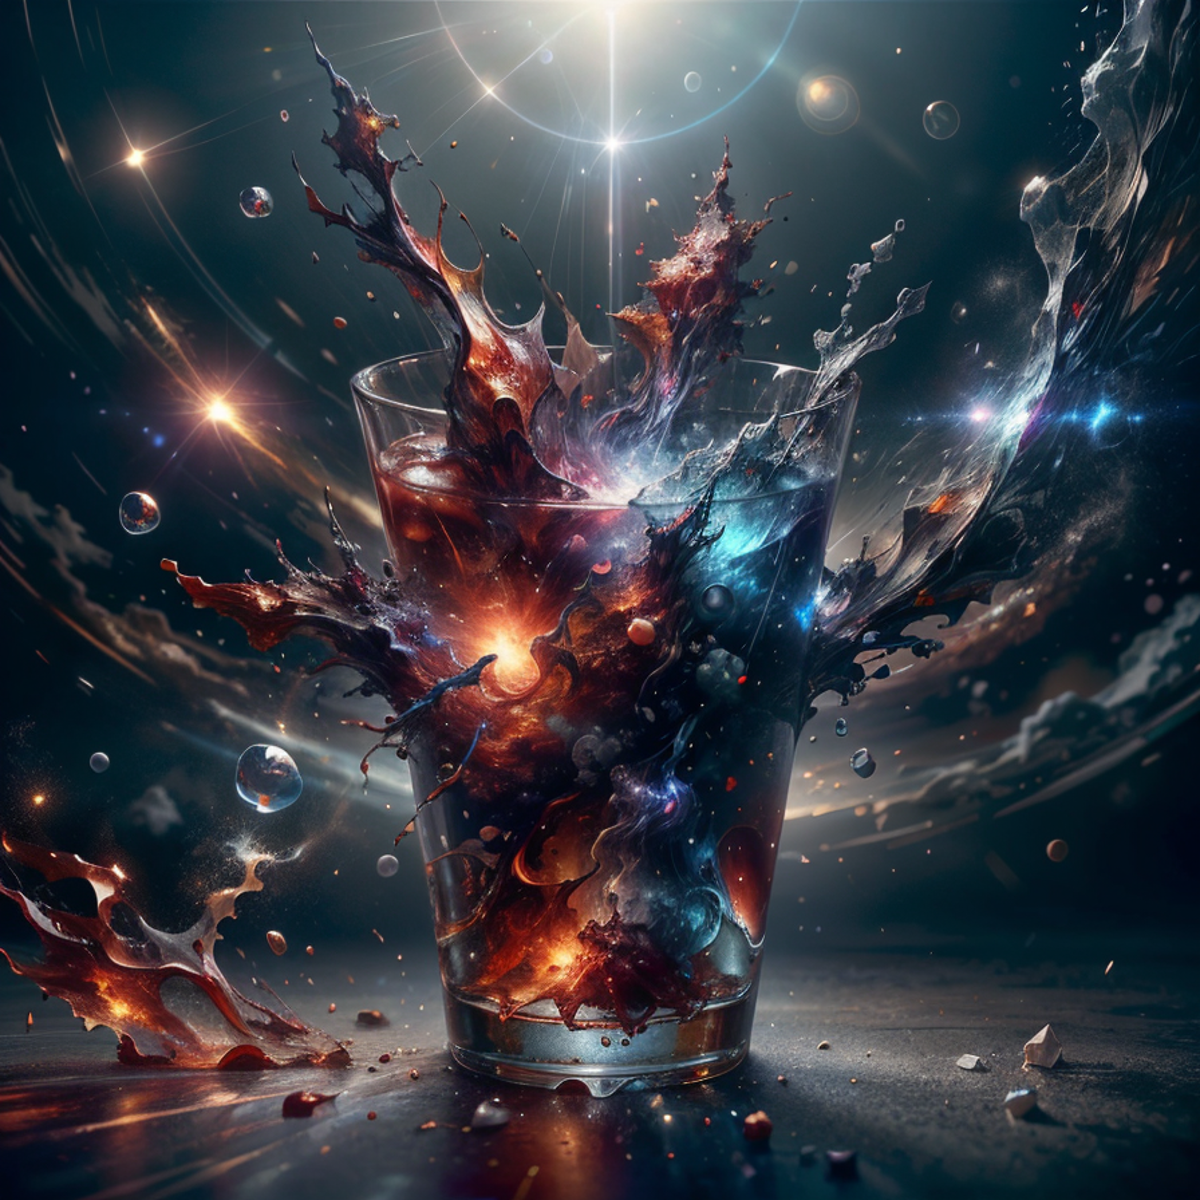 Explosion magic - Grimoire image by mageofthesands